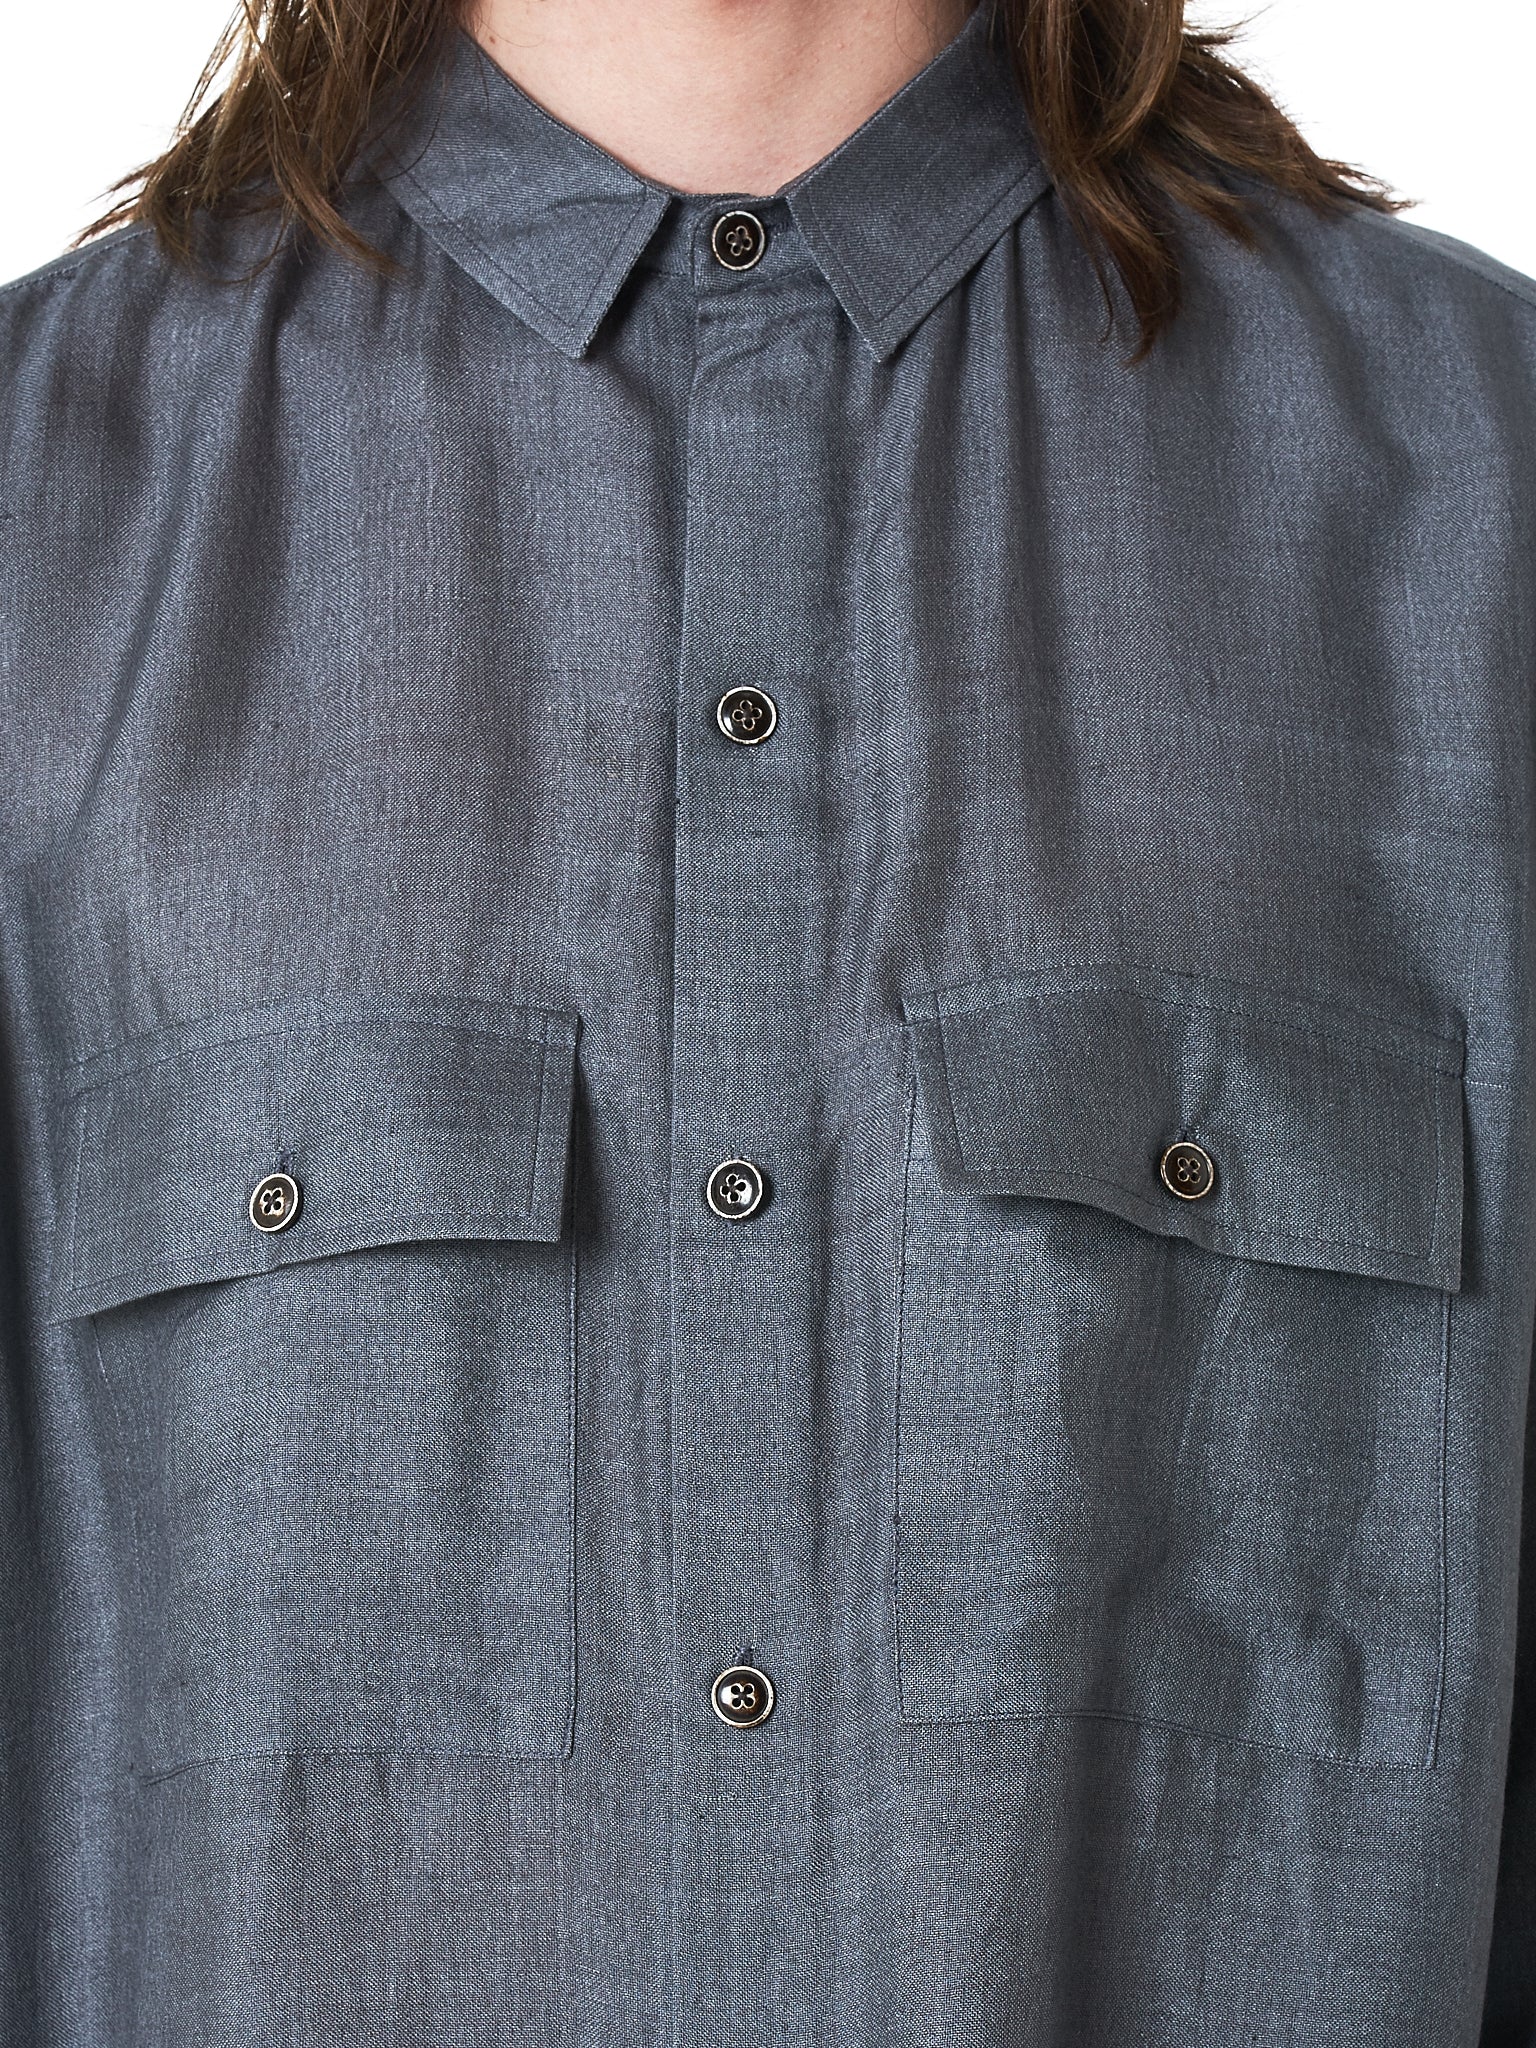 Denis Colomb Shirt - Hlorenzo Detail 2